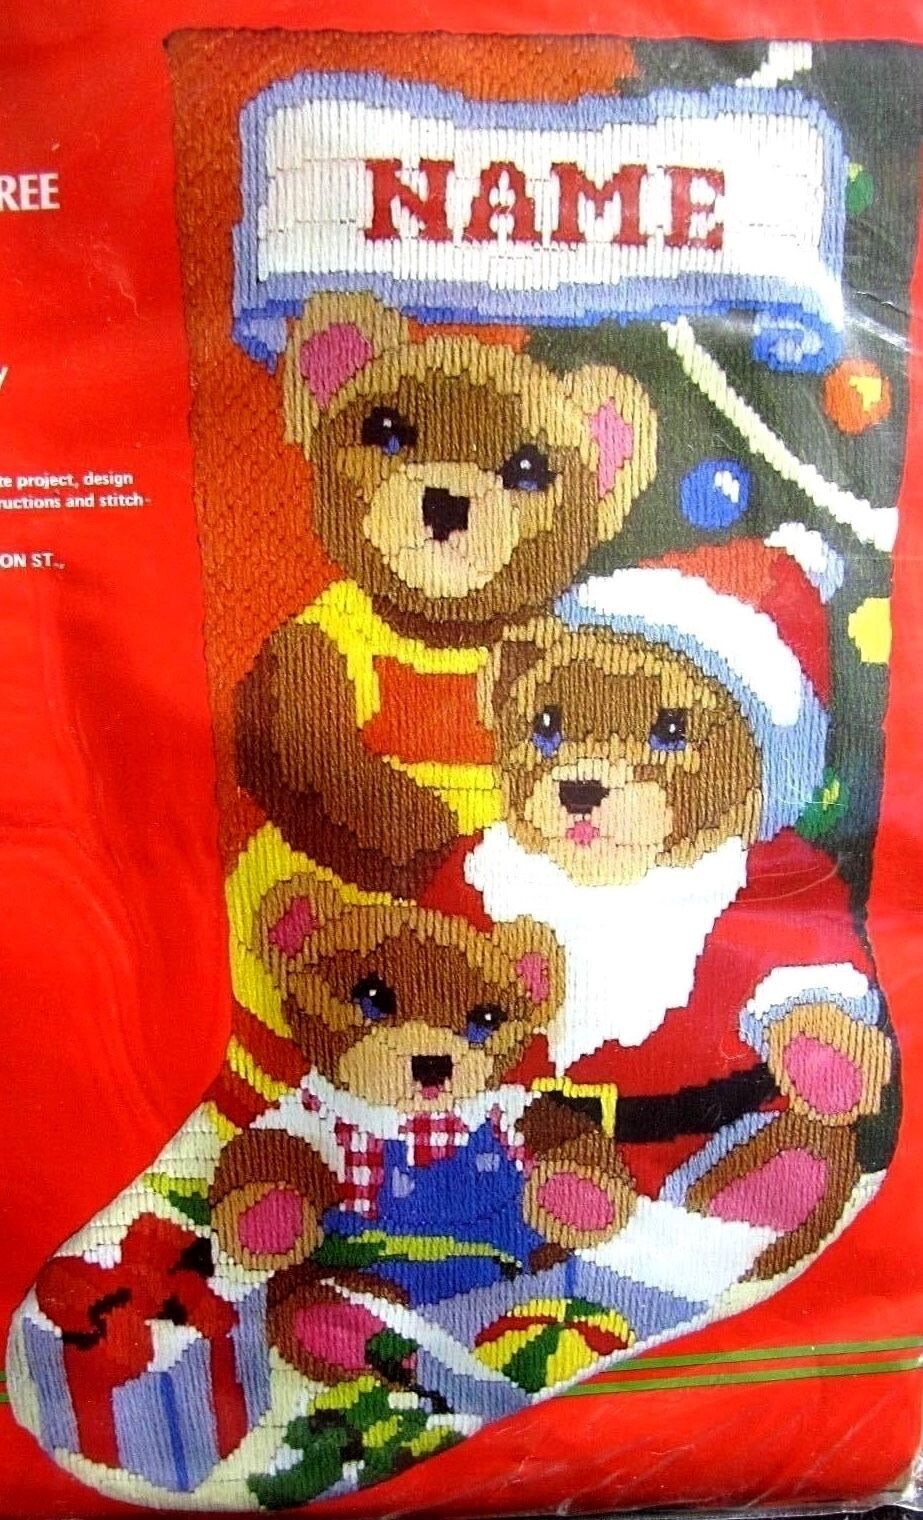 DIY Horizons Santa Teddy Bear Baby Makes Three Long Needlepoint Stocking Kit